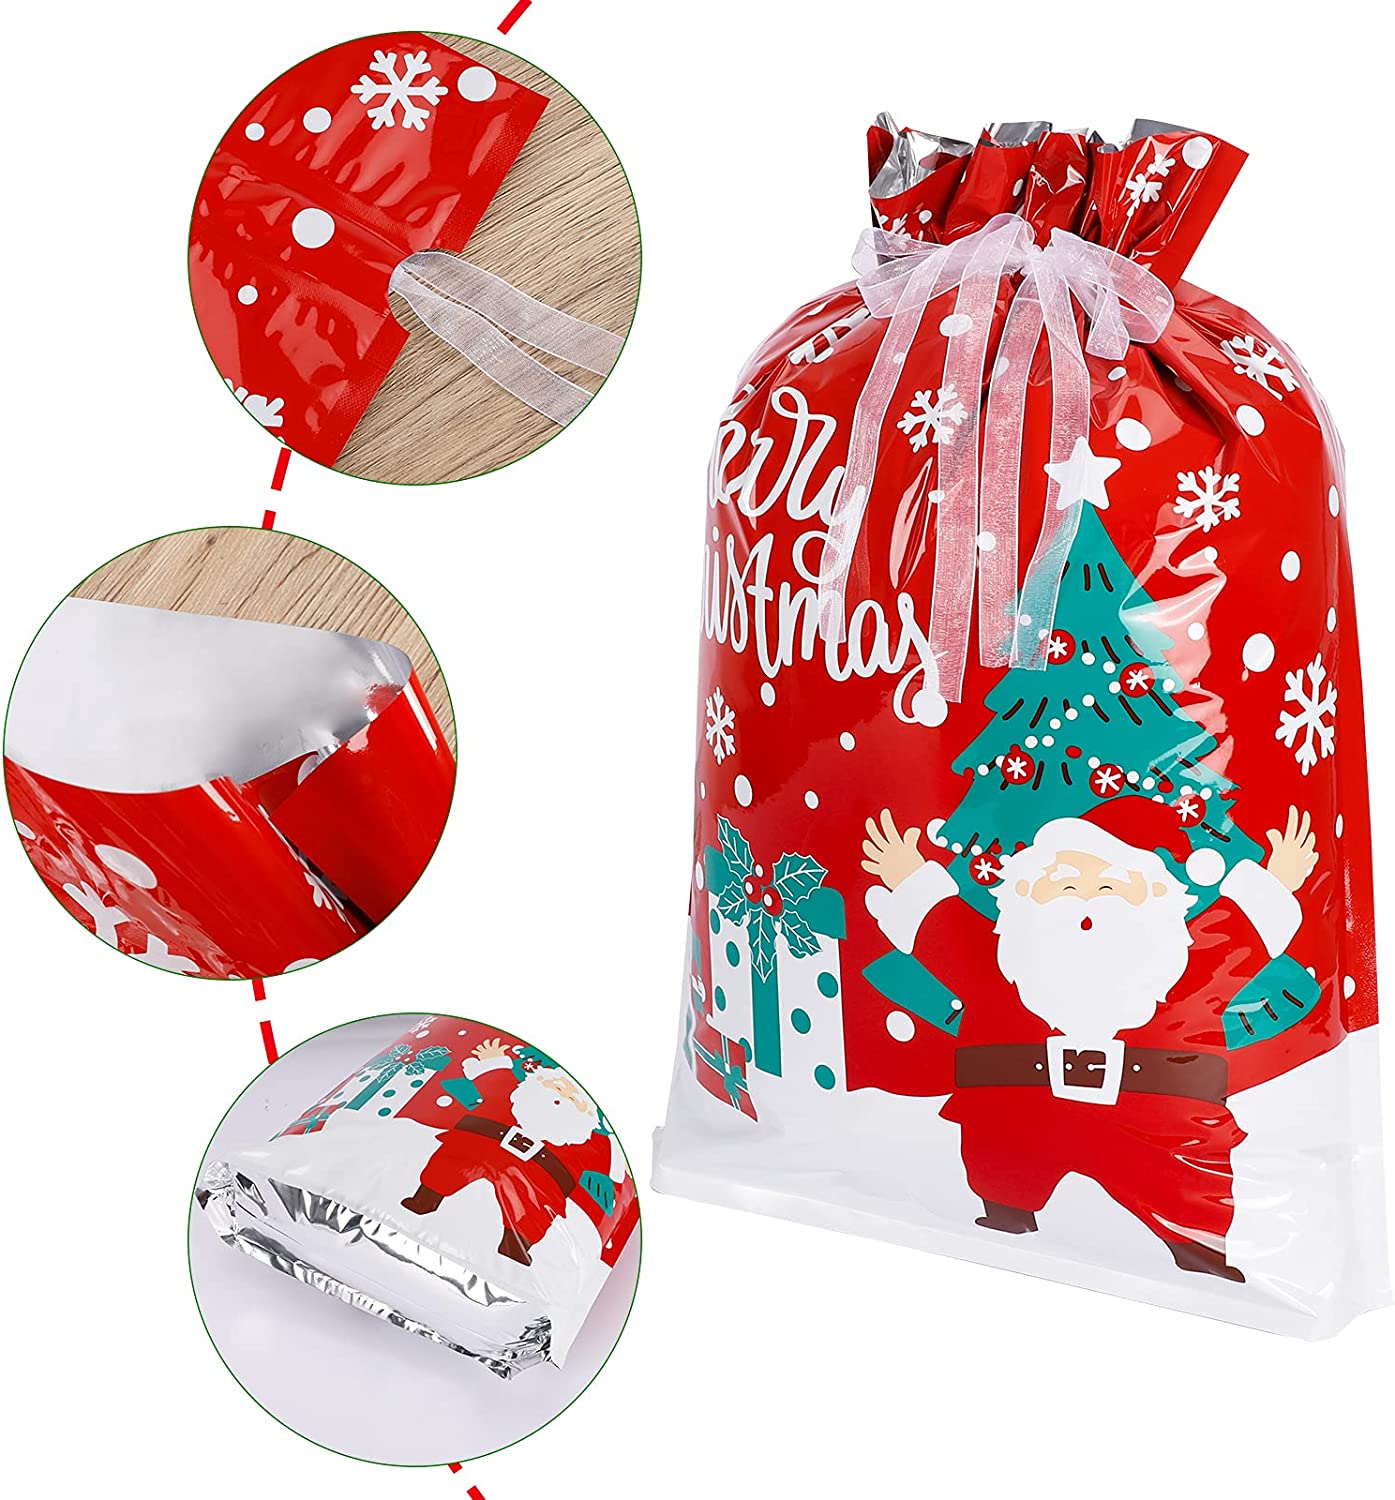 Custom Printed Spot Gift Plastic Packaging Bags Christmas gift packaging bags printed Featured Image